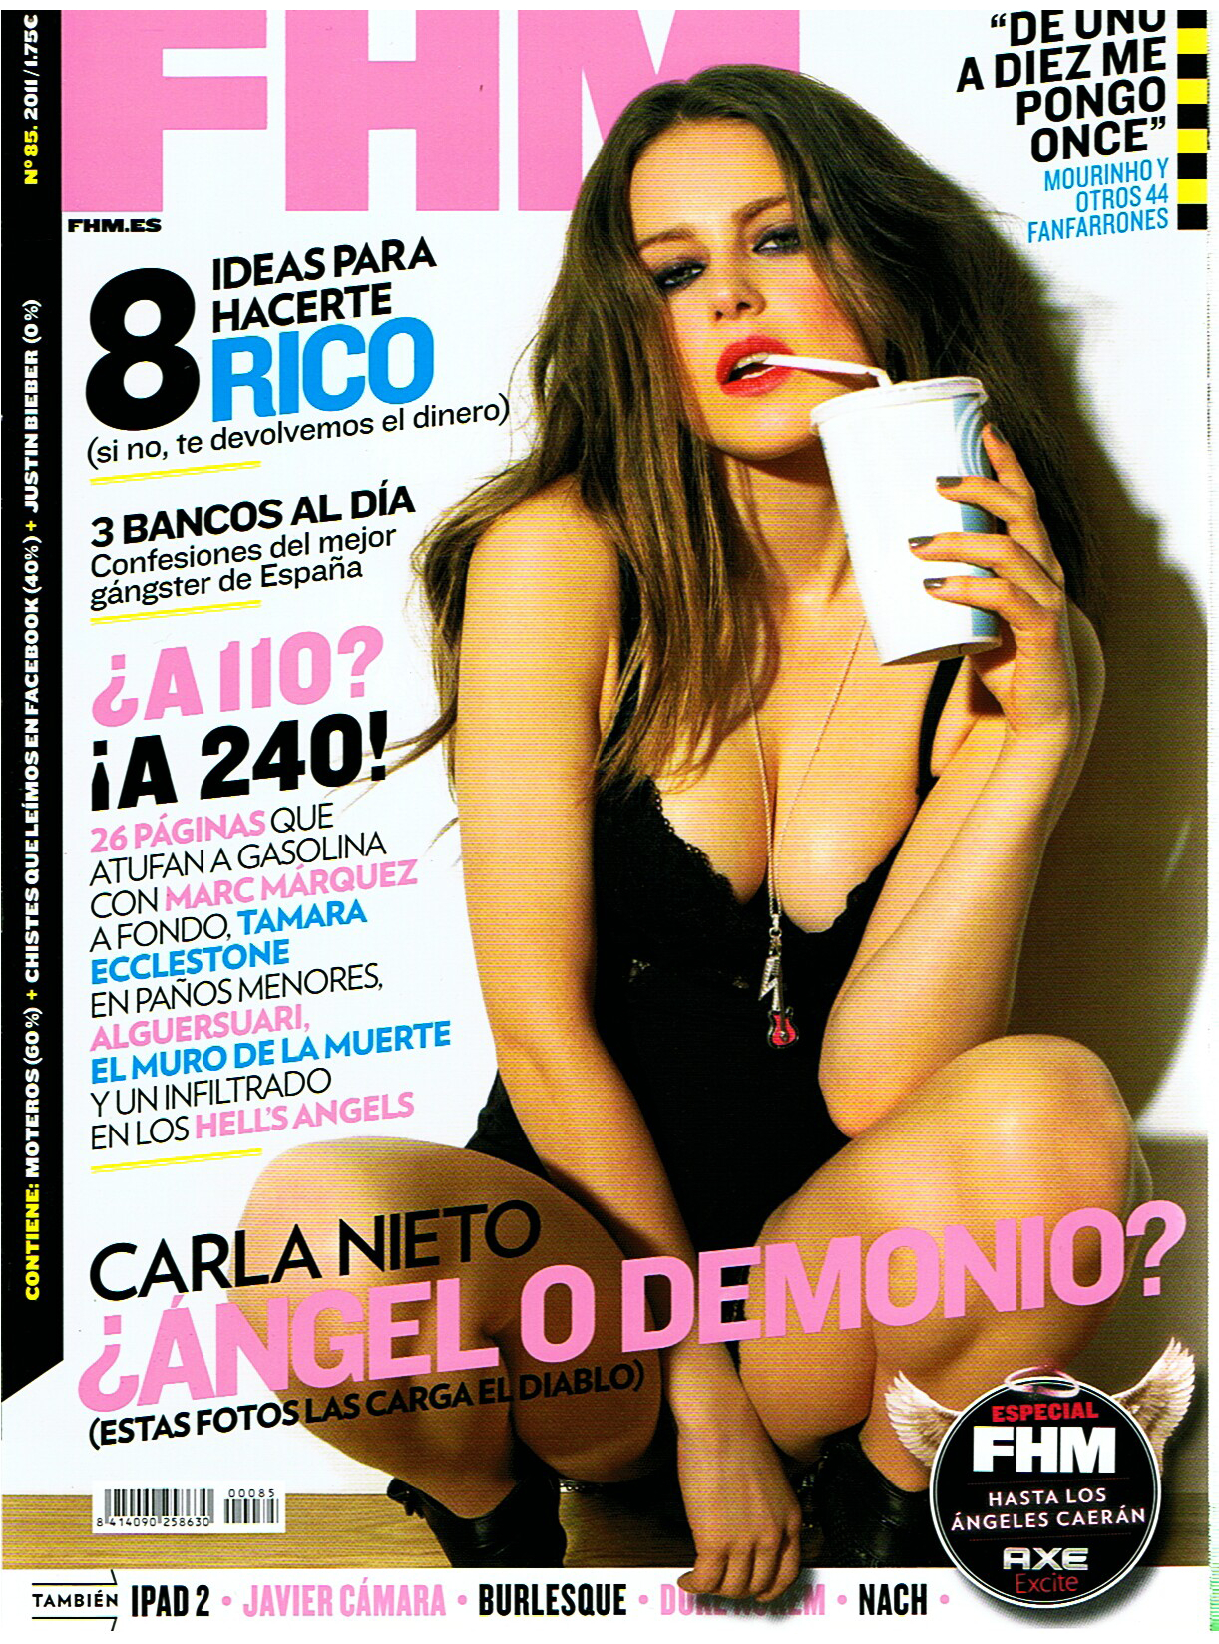 Carla Nieto looking good in FHM Magazine